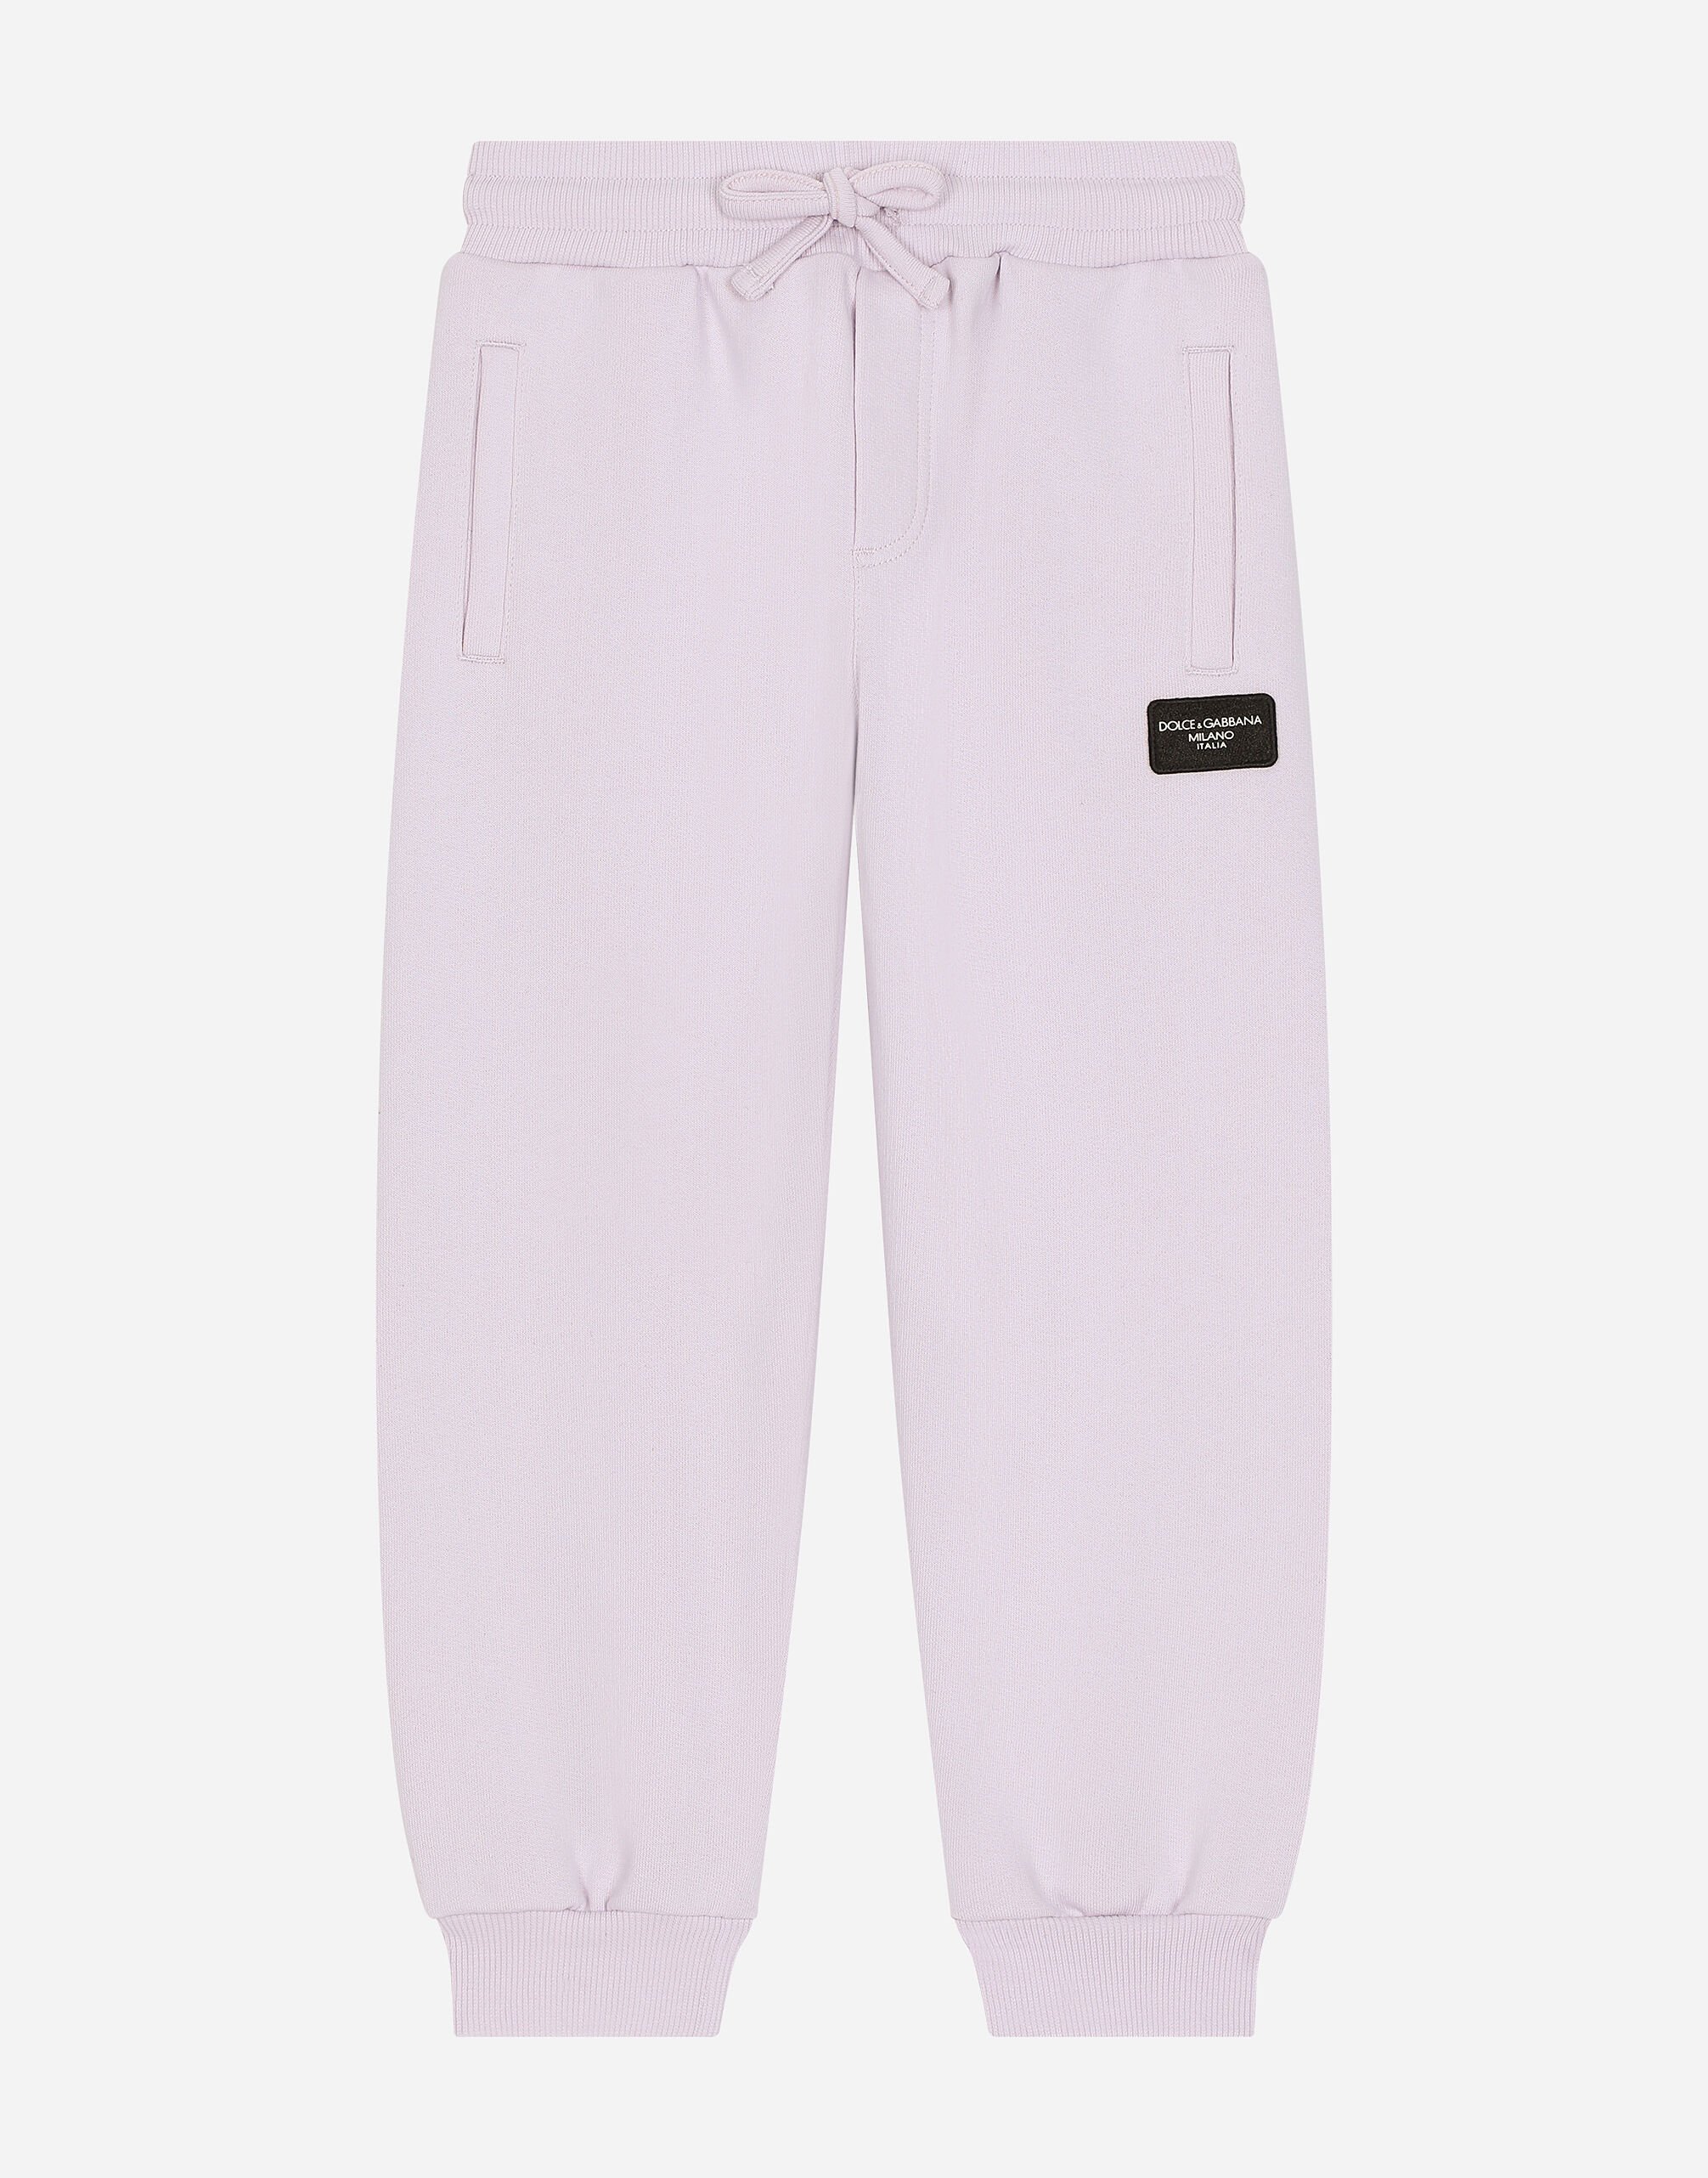 Dolce & Gabbana Jersey jogging pants with logo tag Print L5JP5BHPGF4